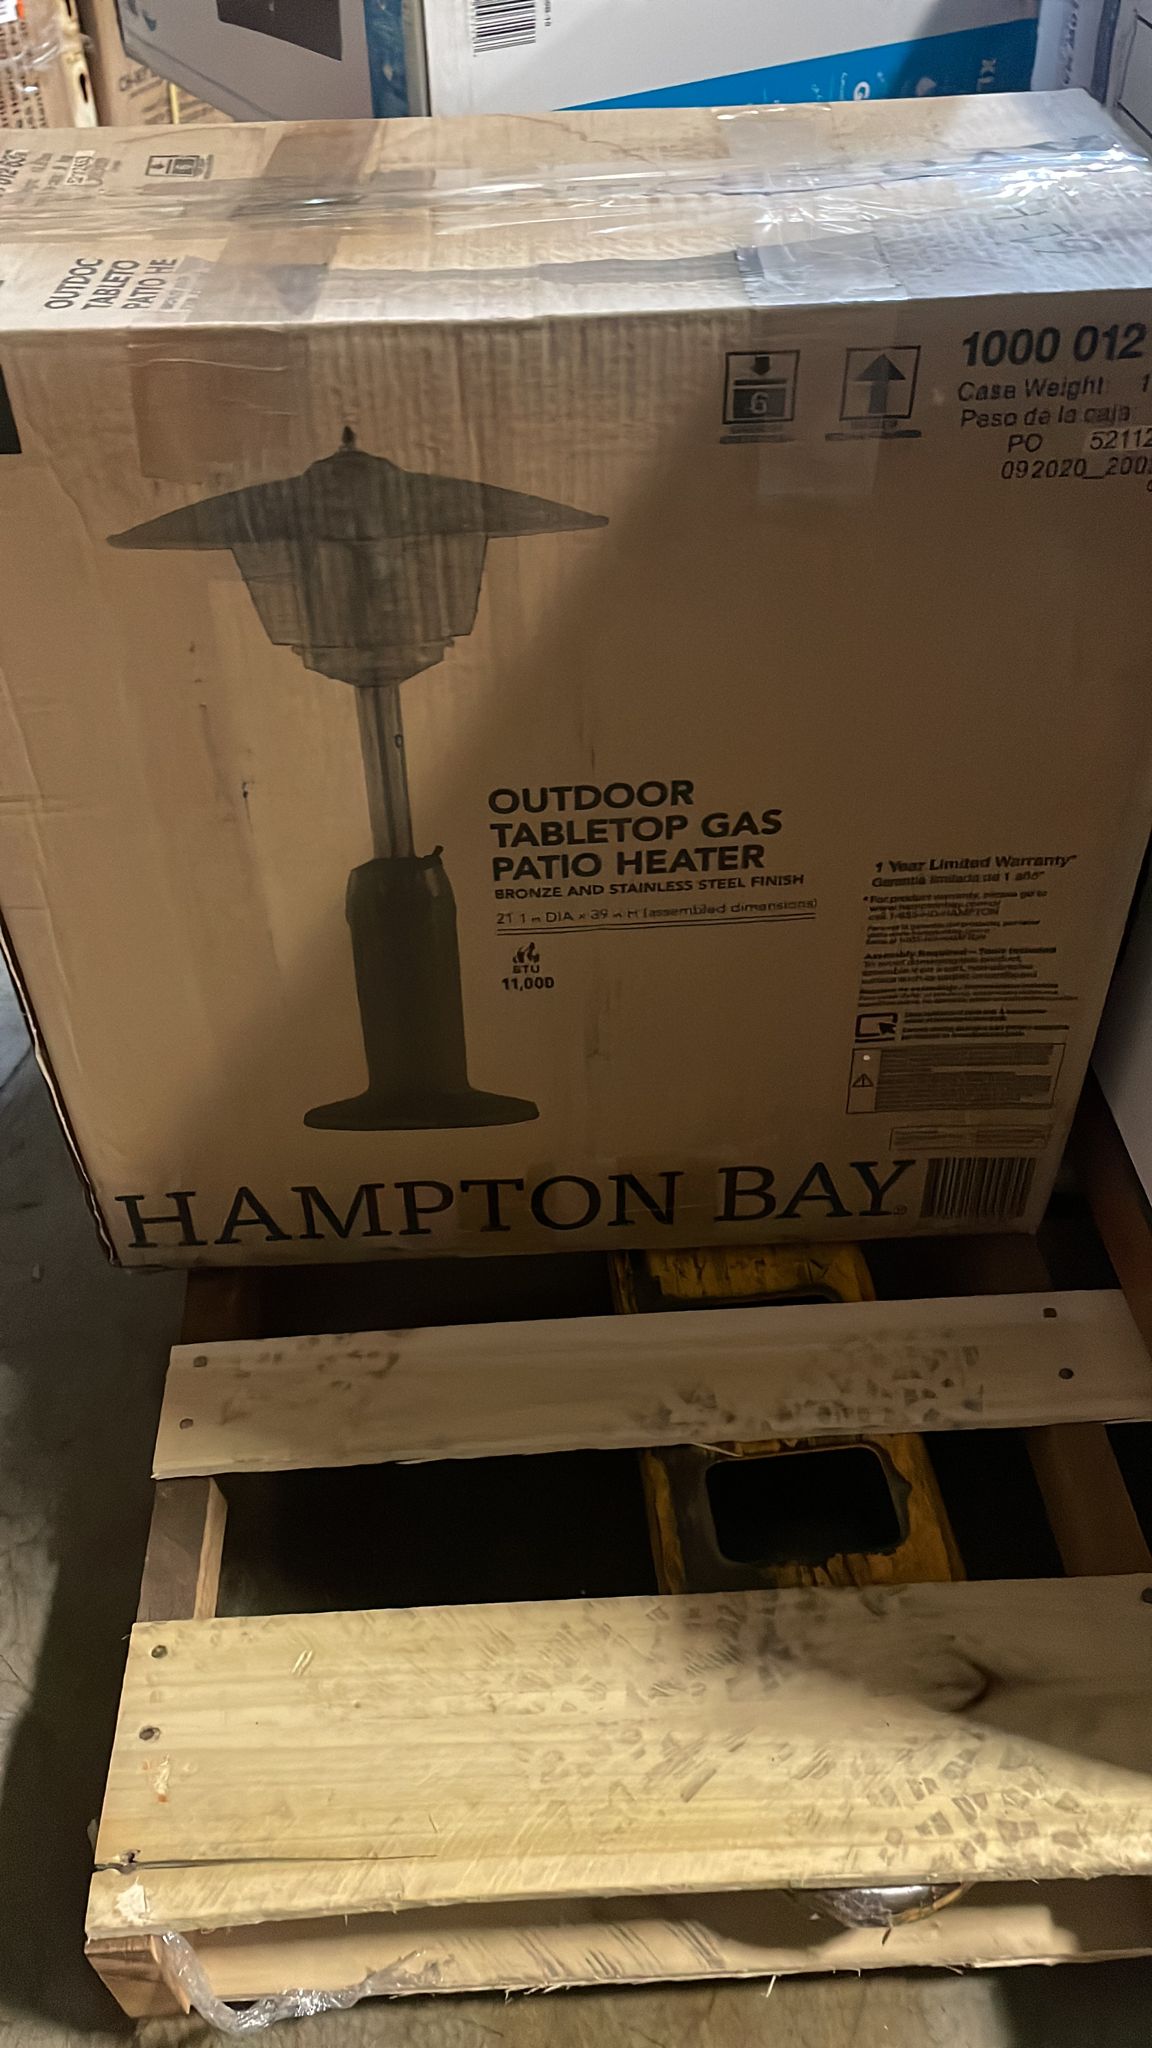 Hampton Bay 11,000 BTU Powder Coated Bronze Tabletop Propane Patio Heater - $110